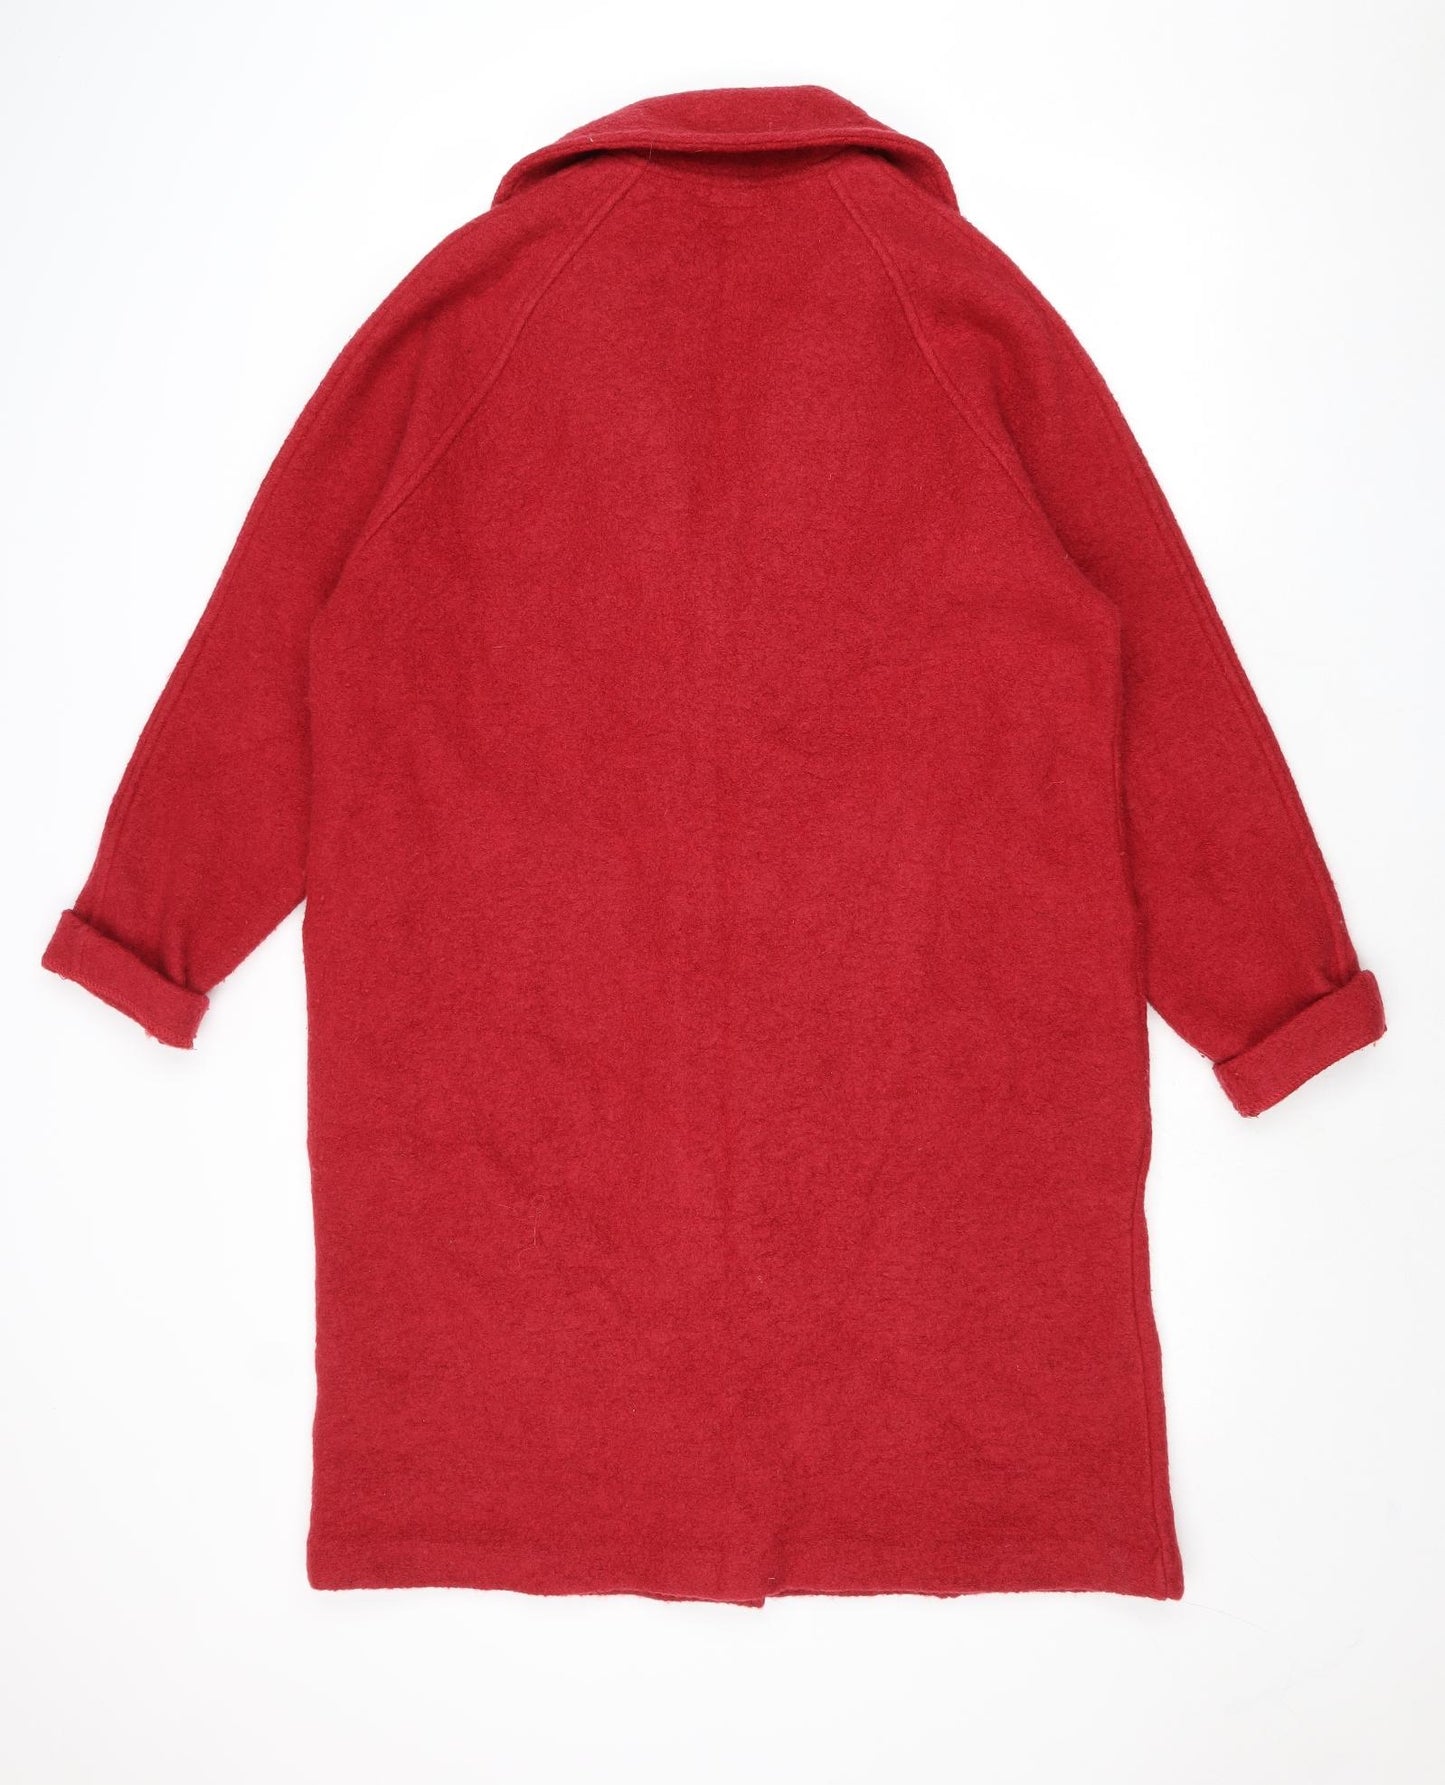 Adini Womens Red Overcoat Coat Size M Button